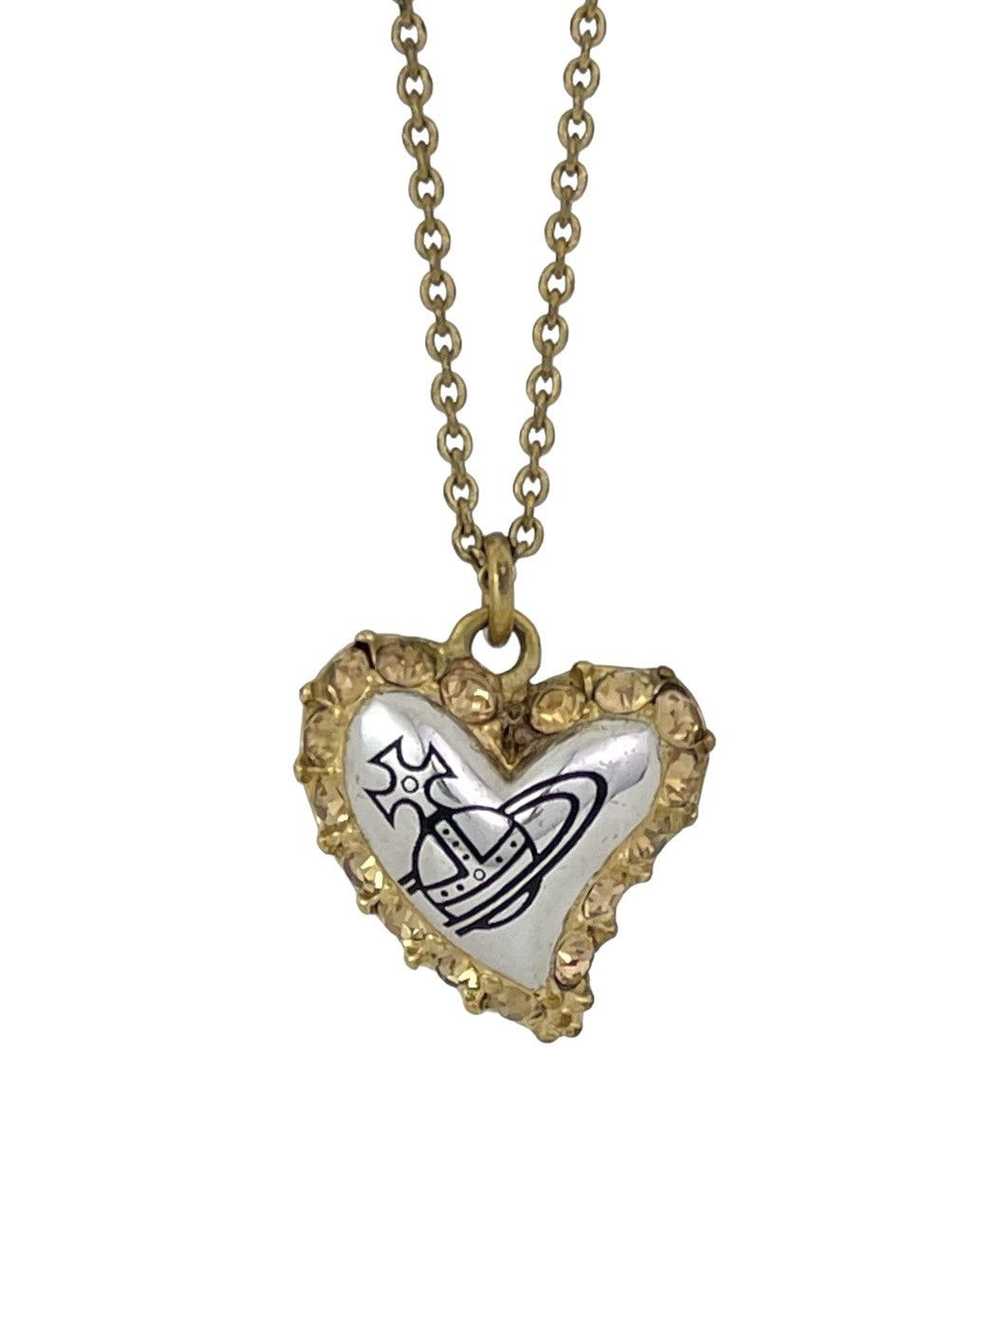 Vivienne Westwood Crystal Heart Orb Necklace - image 1